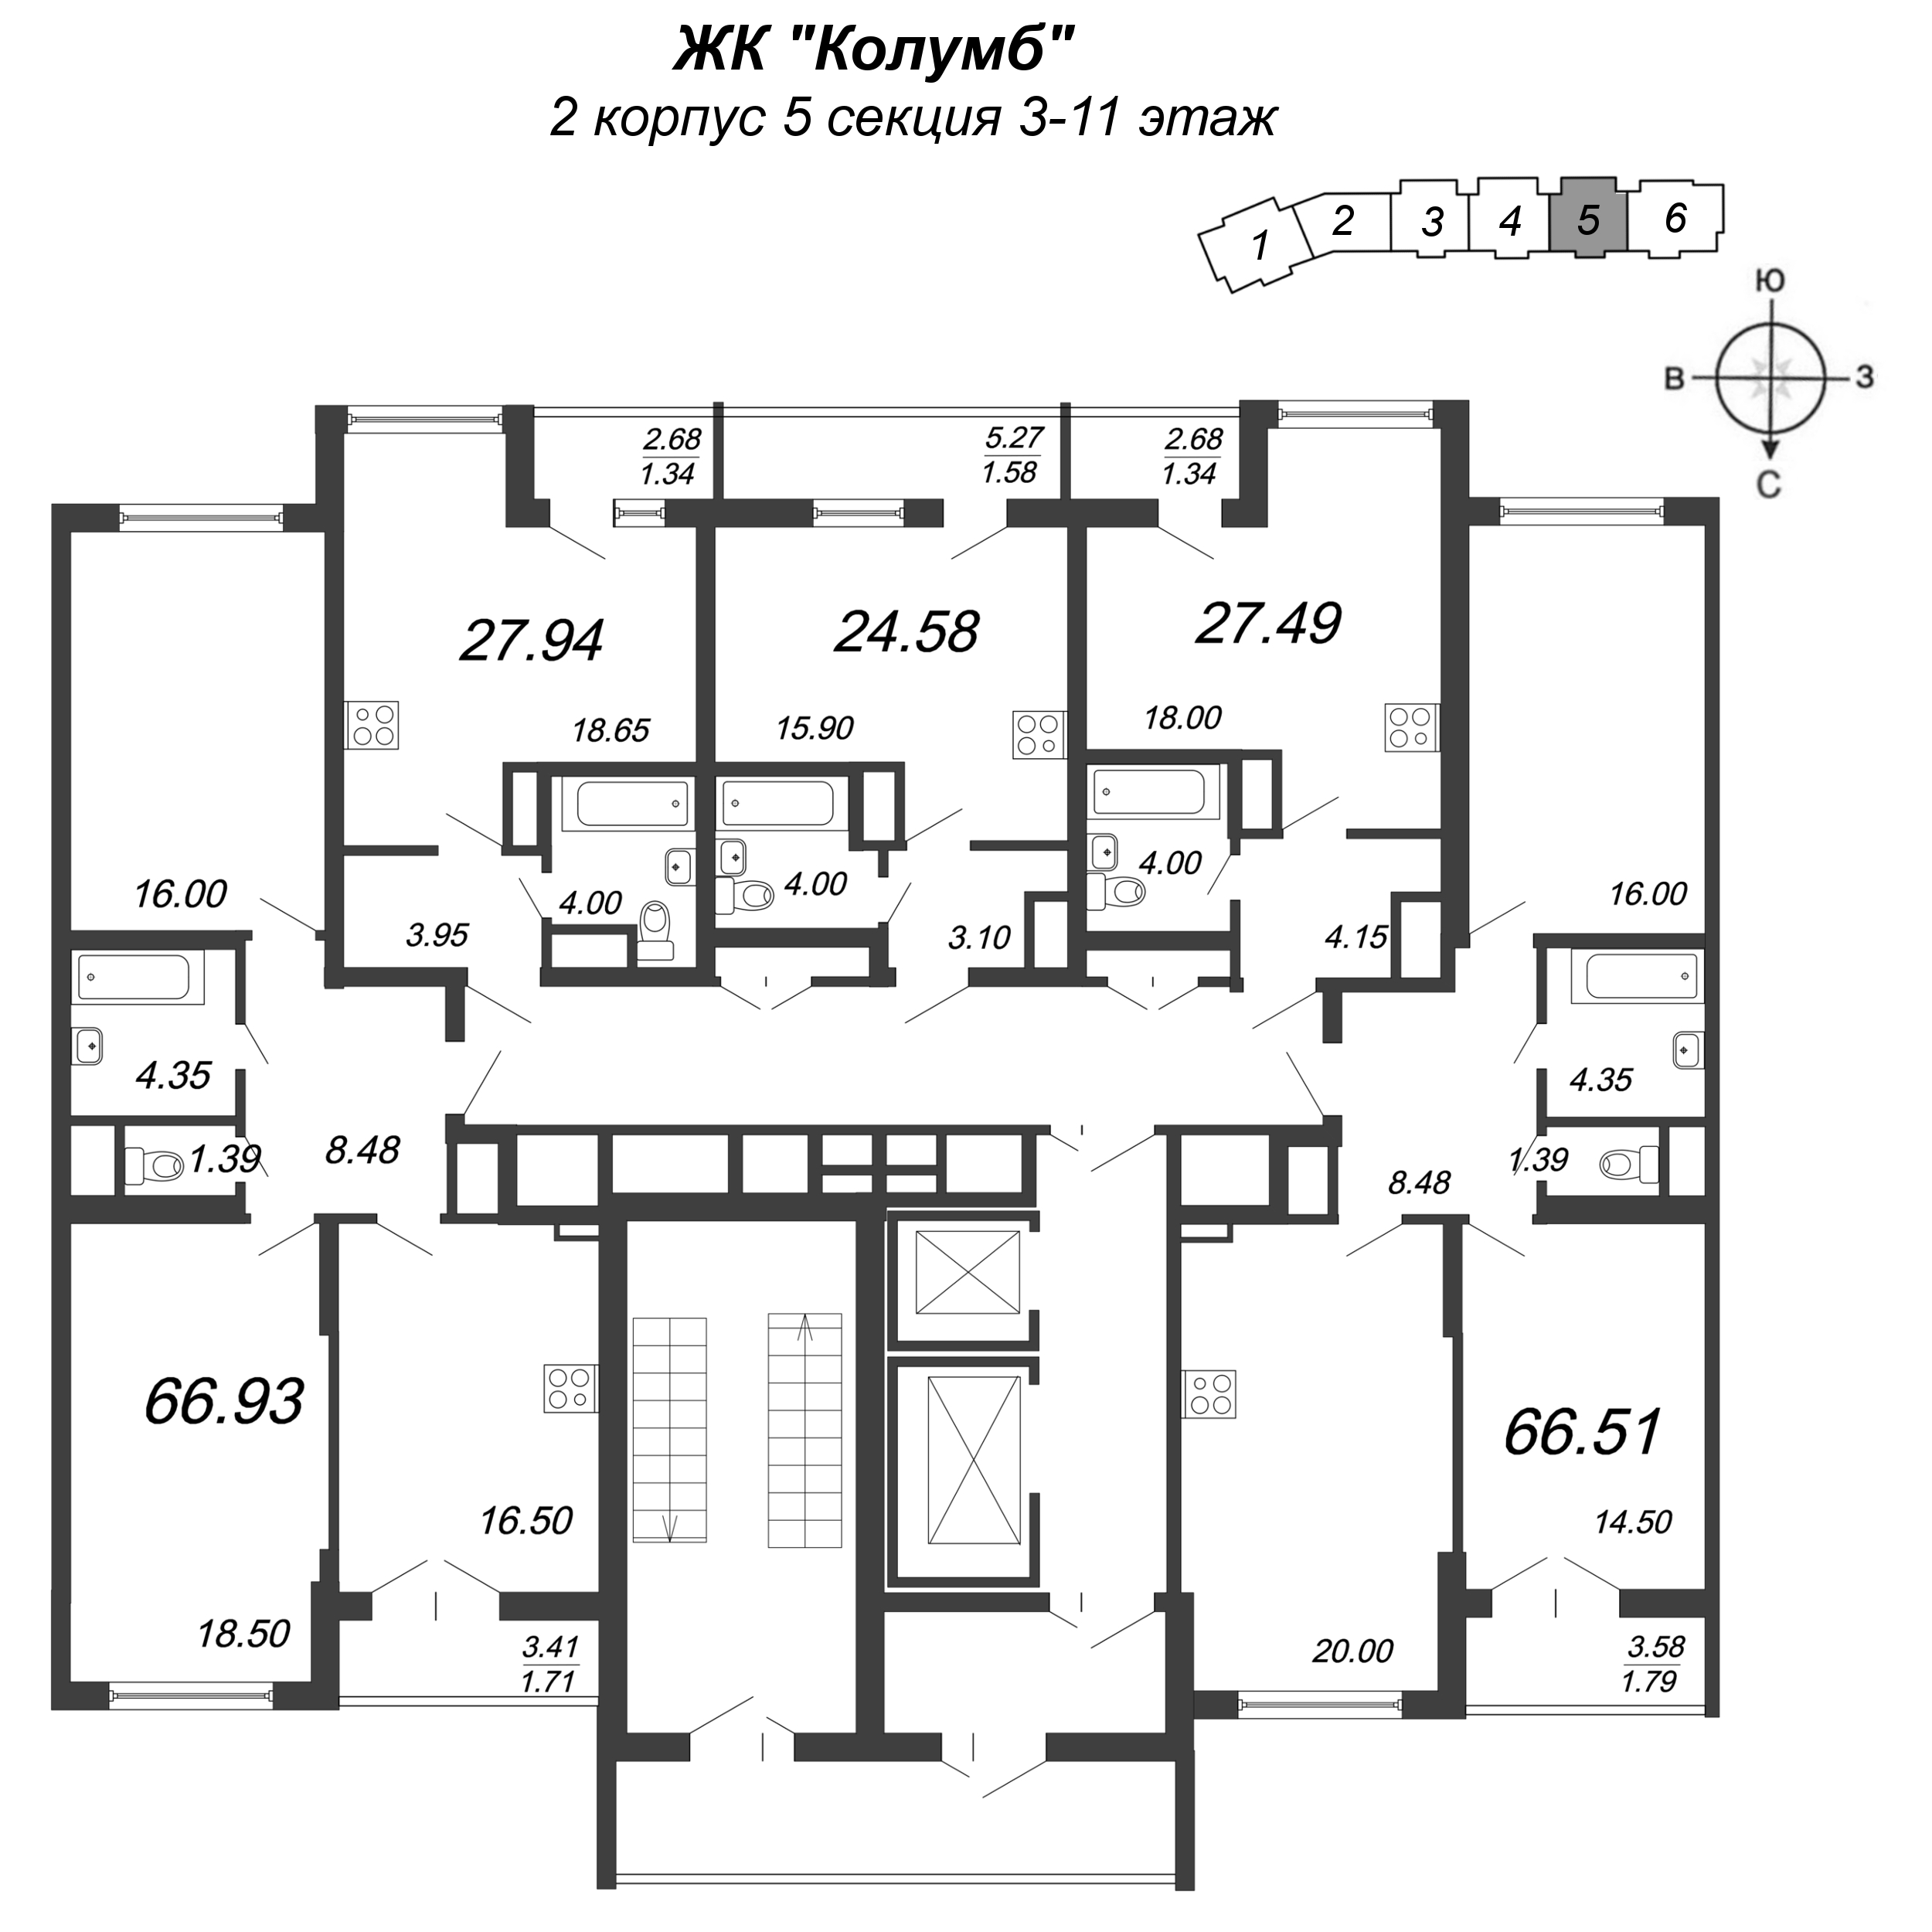 Квартира-студия, 28.5 м² в ЖК "Колумб" - планировка этажа